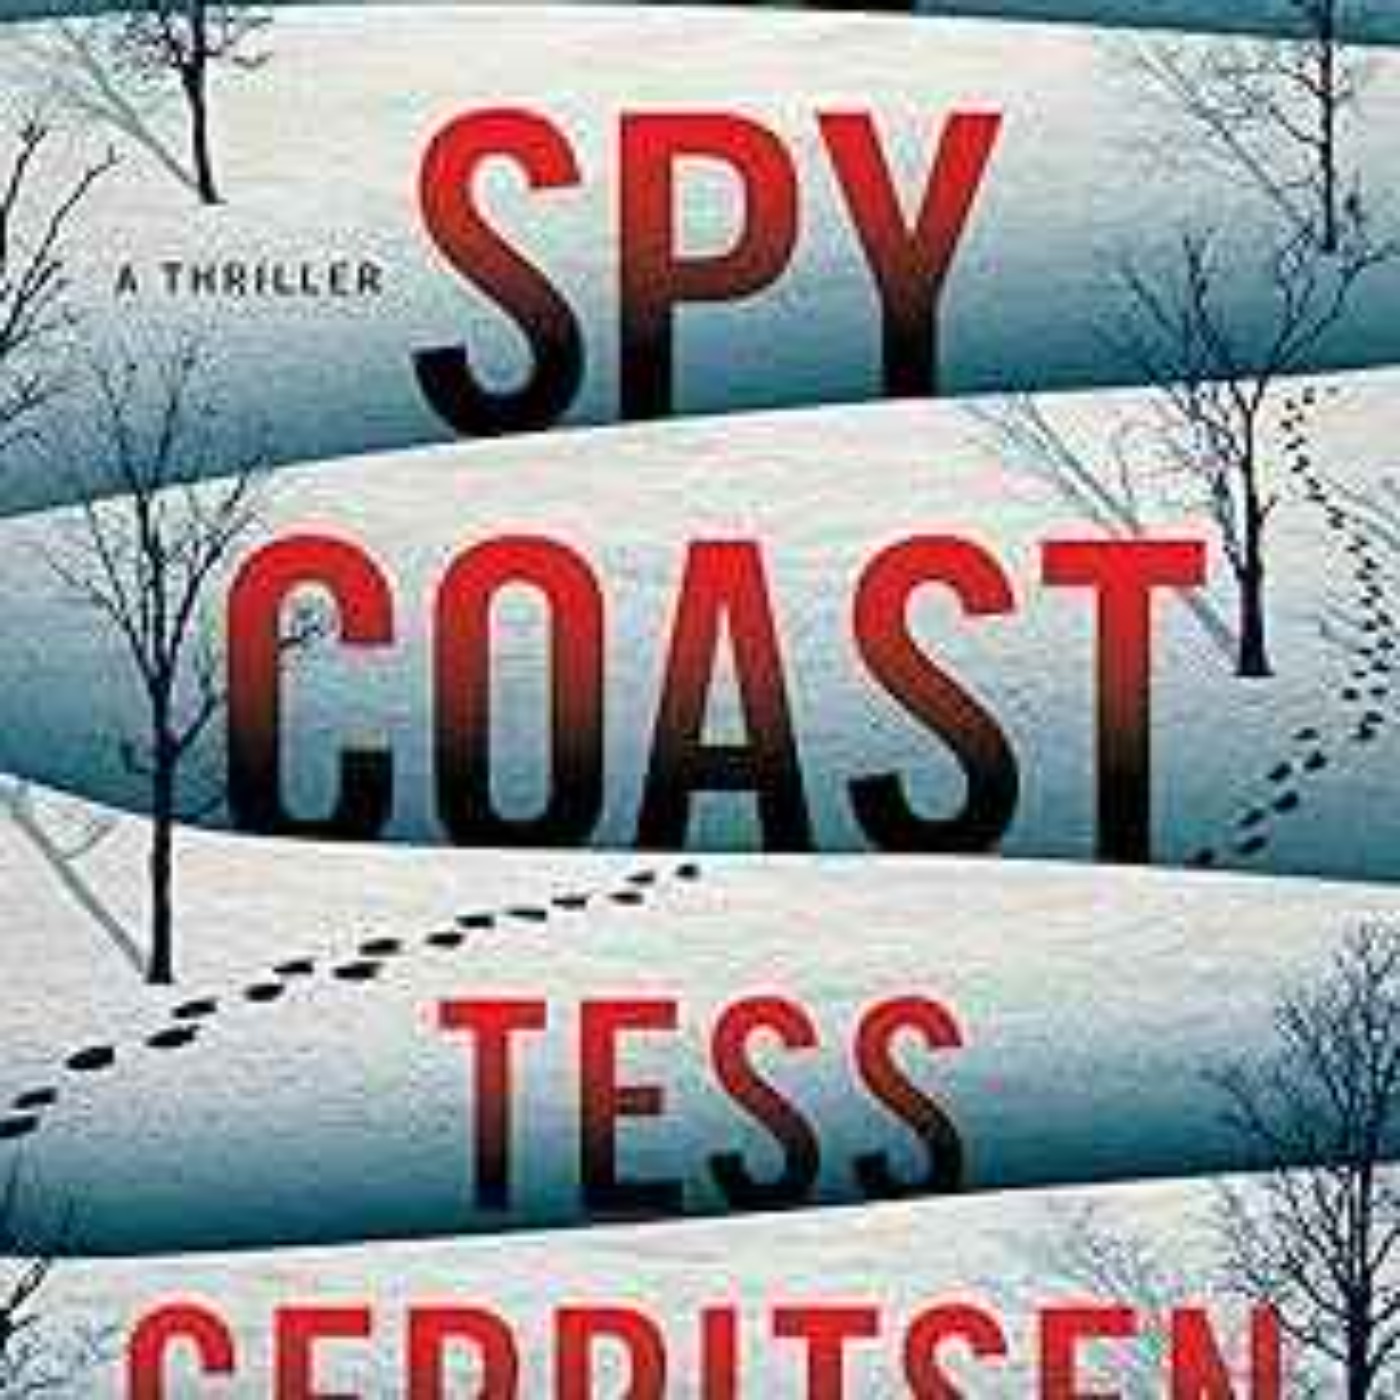 Tess Gerritsen - The Spy Coast: A Thriller (The Martini Club Book 1)